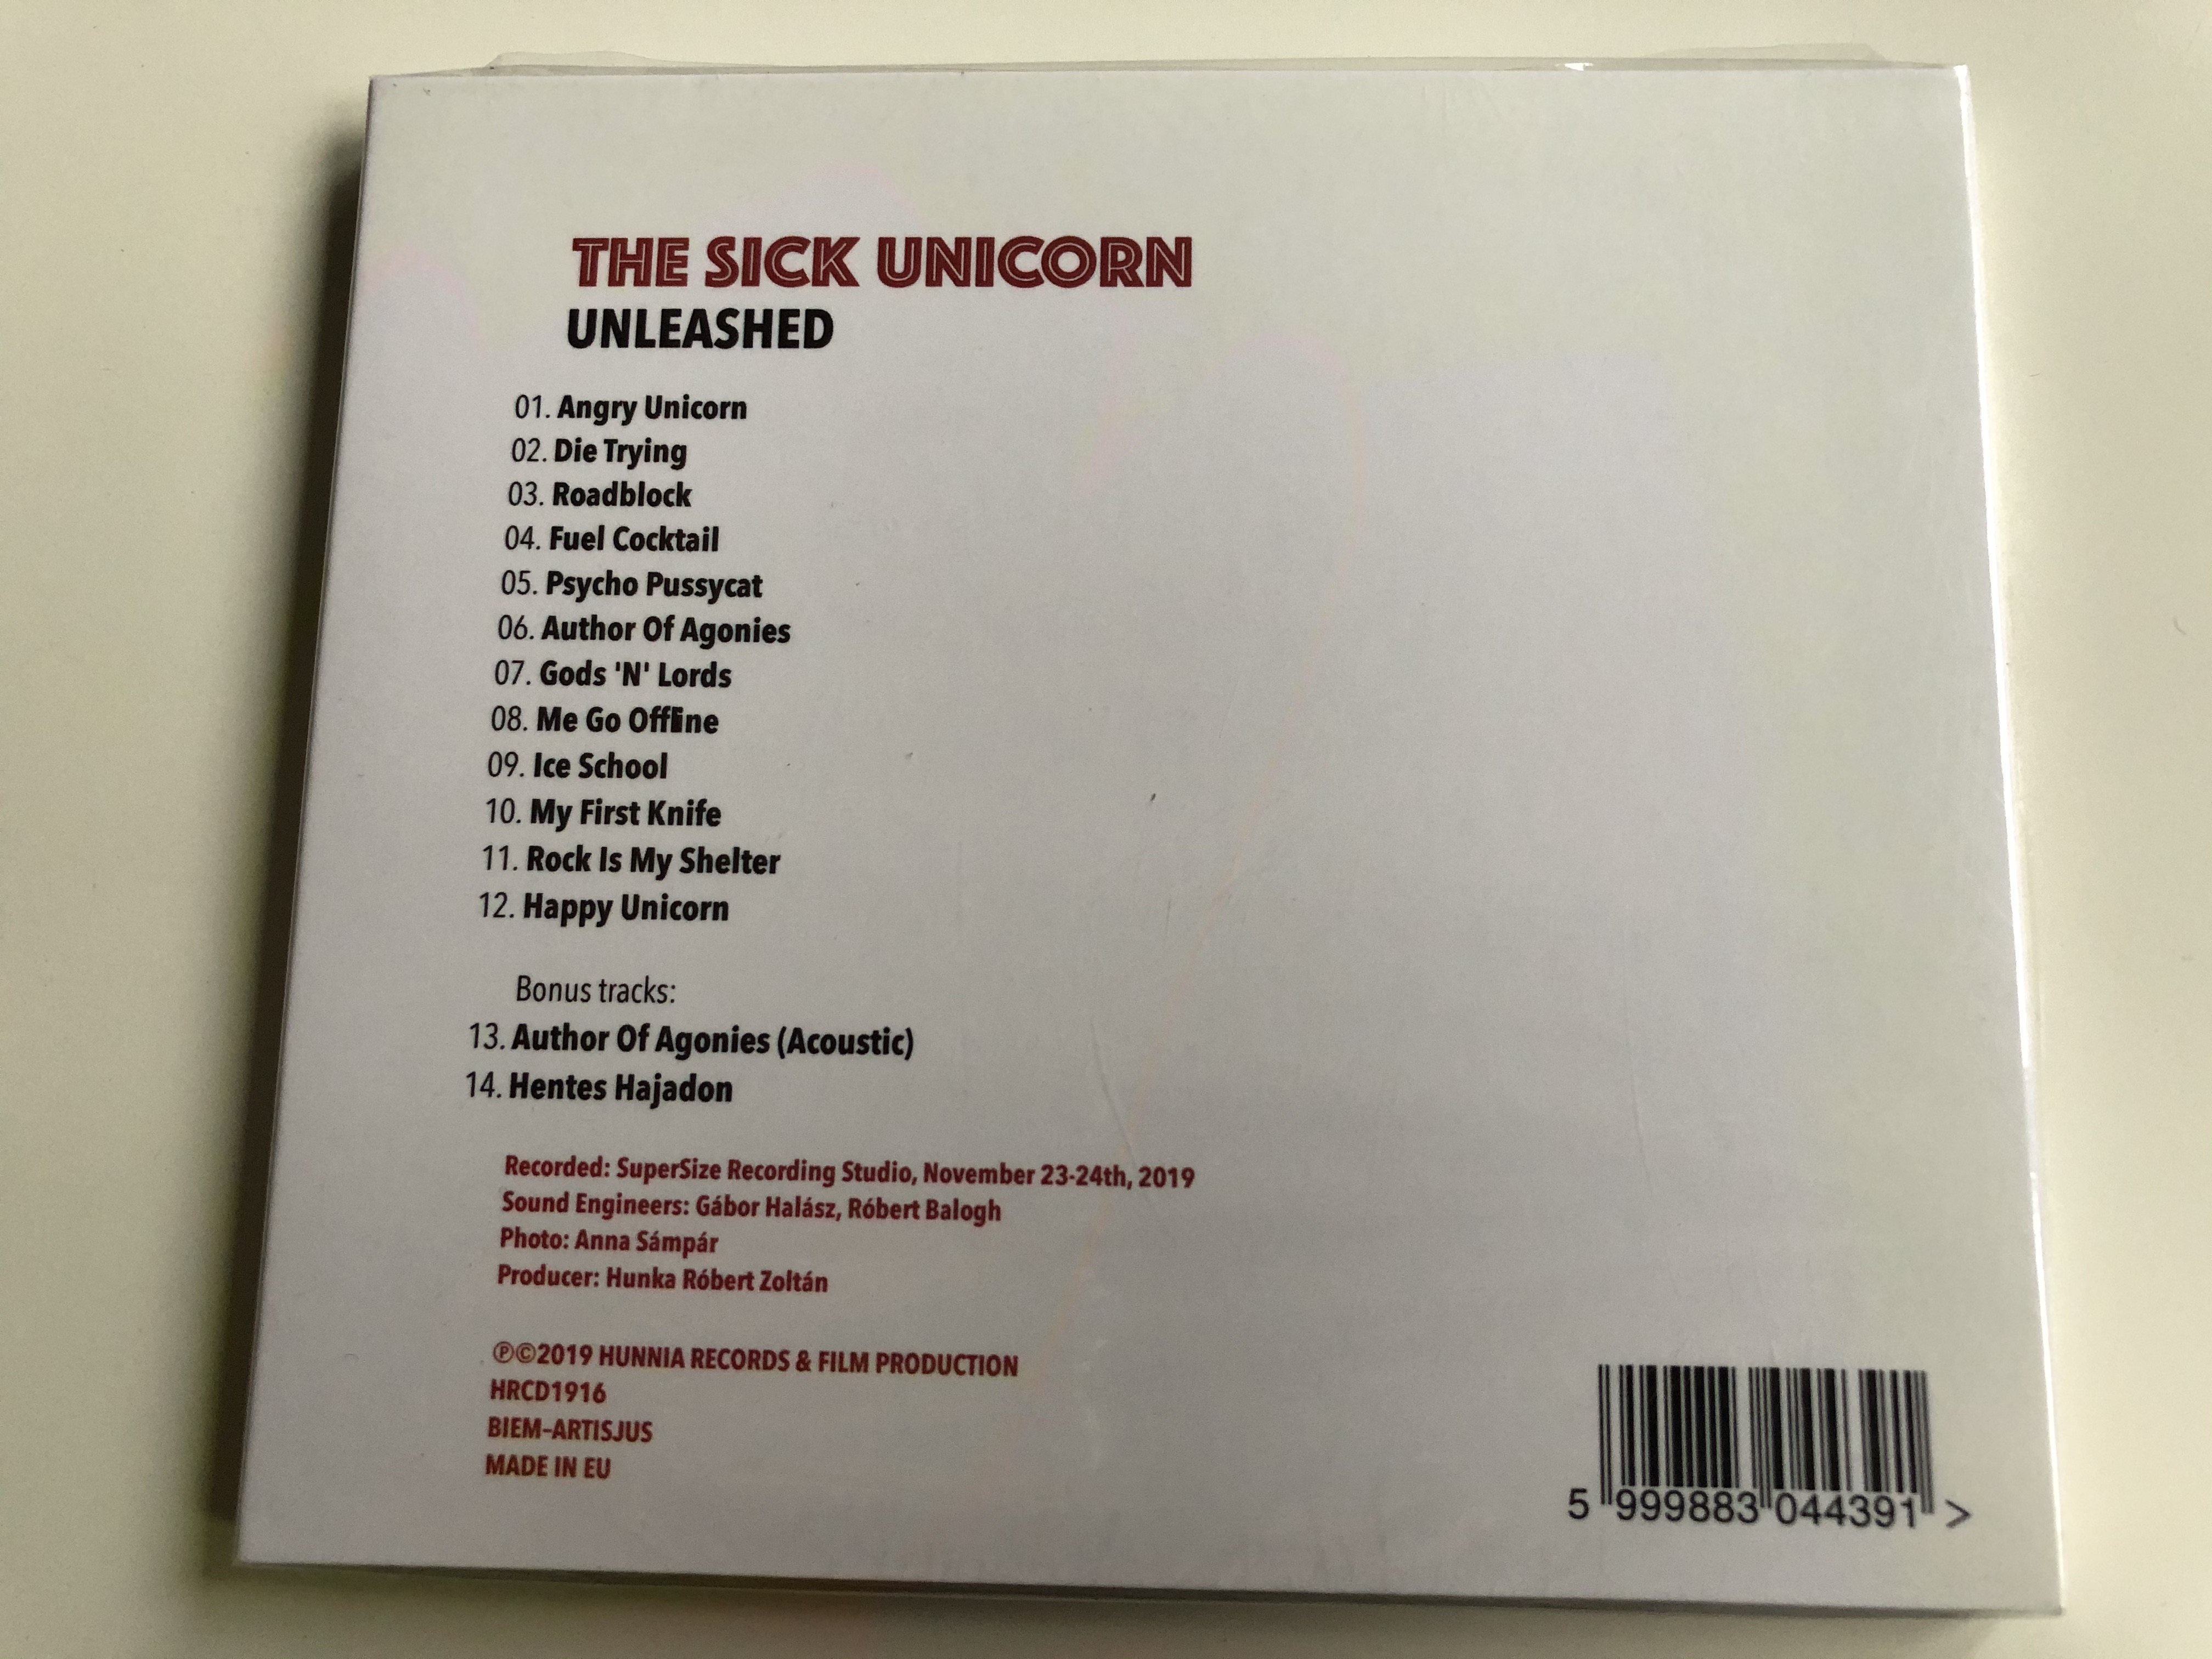 the-sick-unicorn-unleashed-hunnia-records-film-production-audio-cd-2019-hrcd1916-2-.jpg